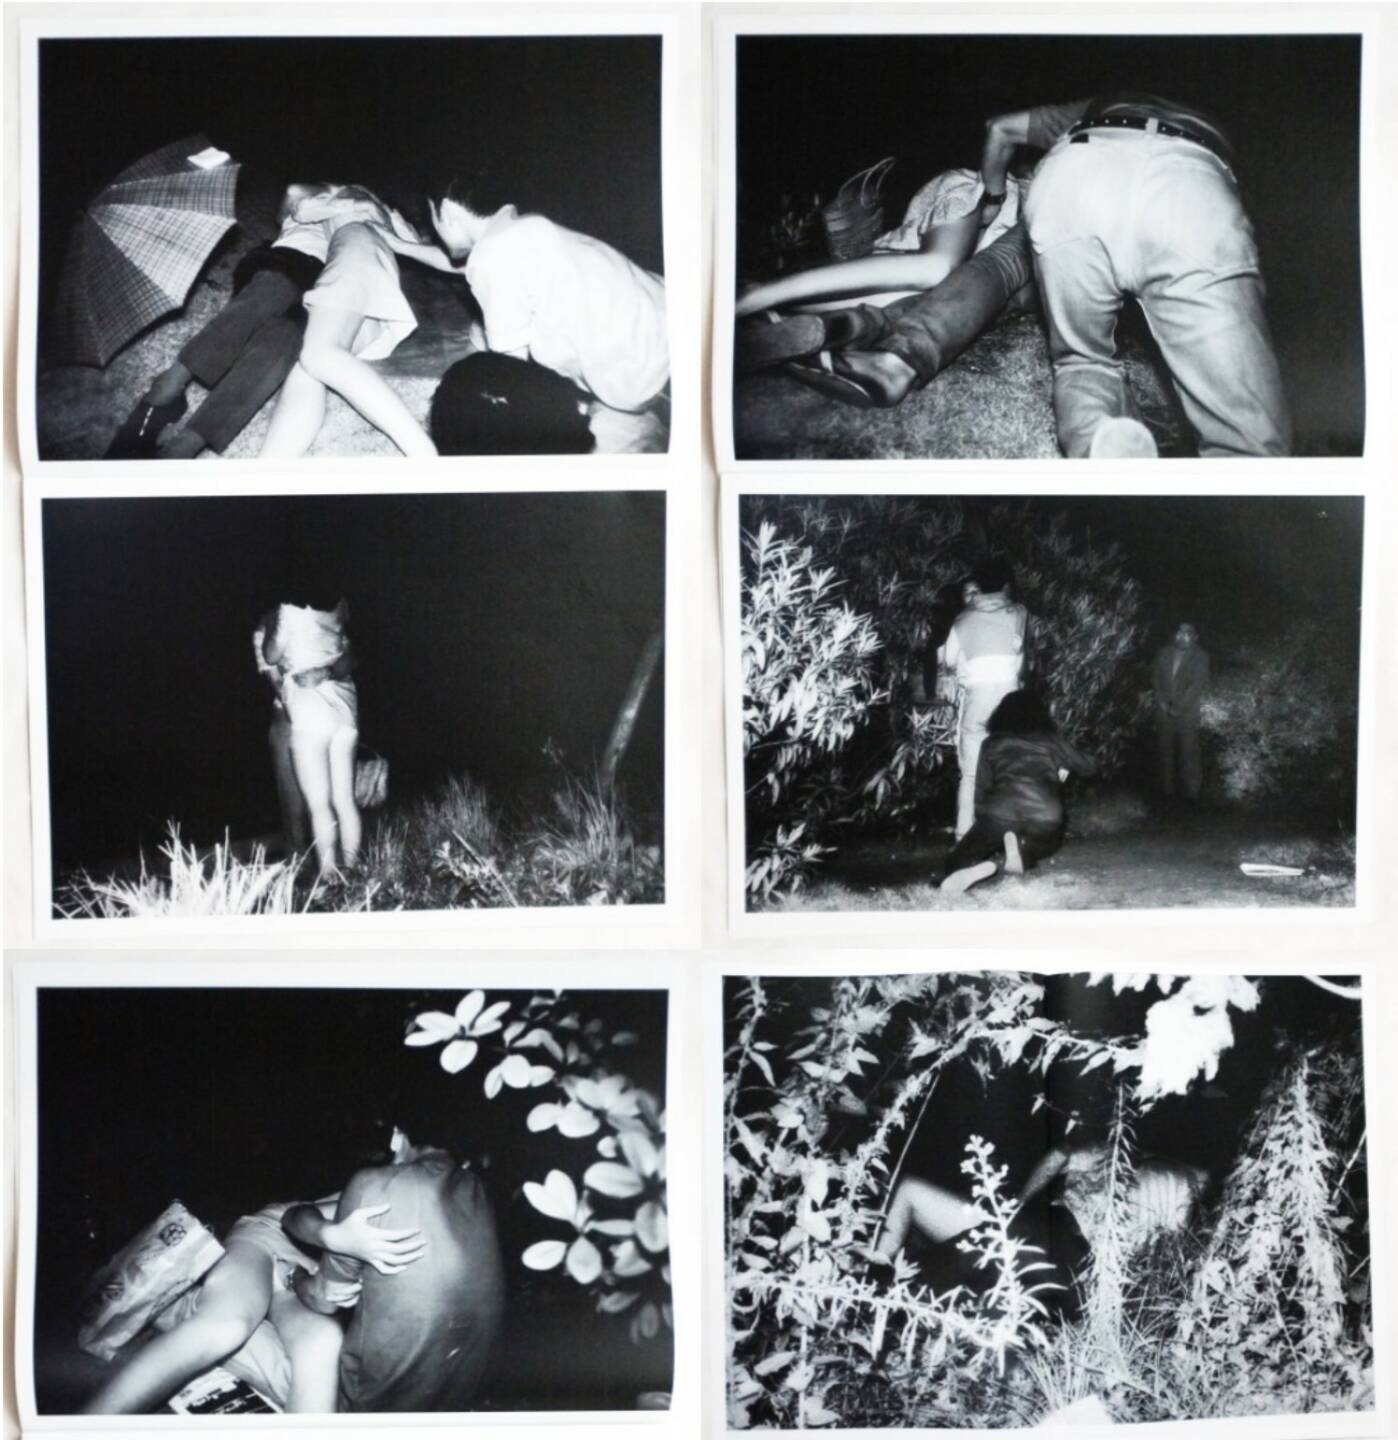 Kohei Yoshiyuki - The Park 1971-73, Osiris 2011, Beispielseiten, sample spreads - http://josefchladek.com/book/kohei_yoshiyuki_-_the_park_1971-73